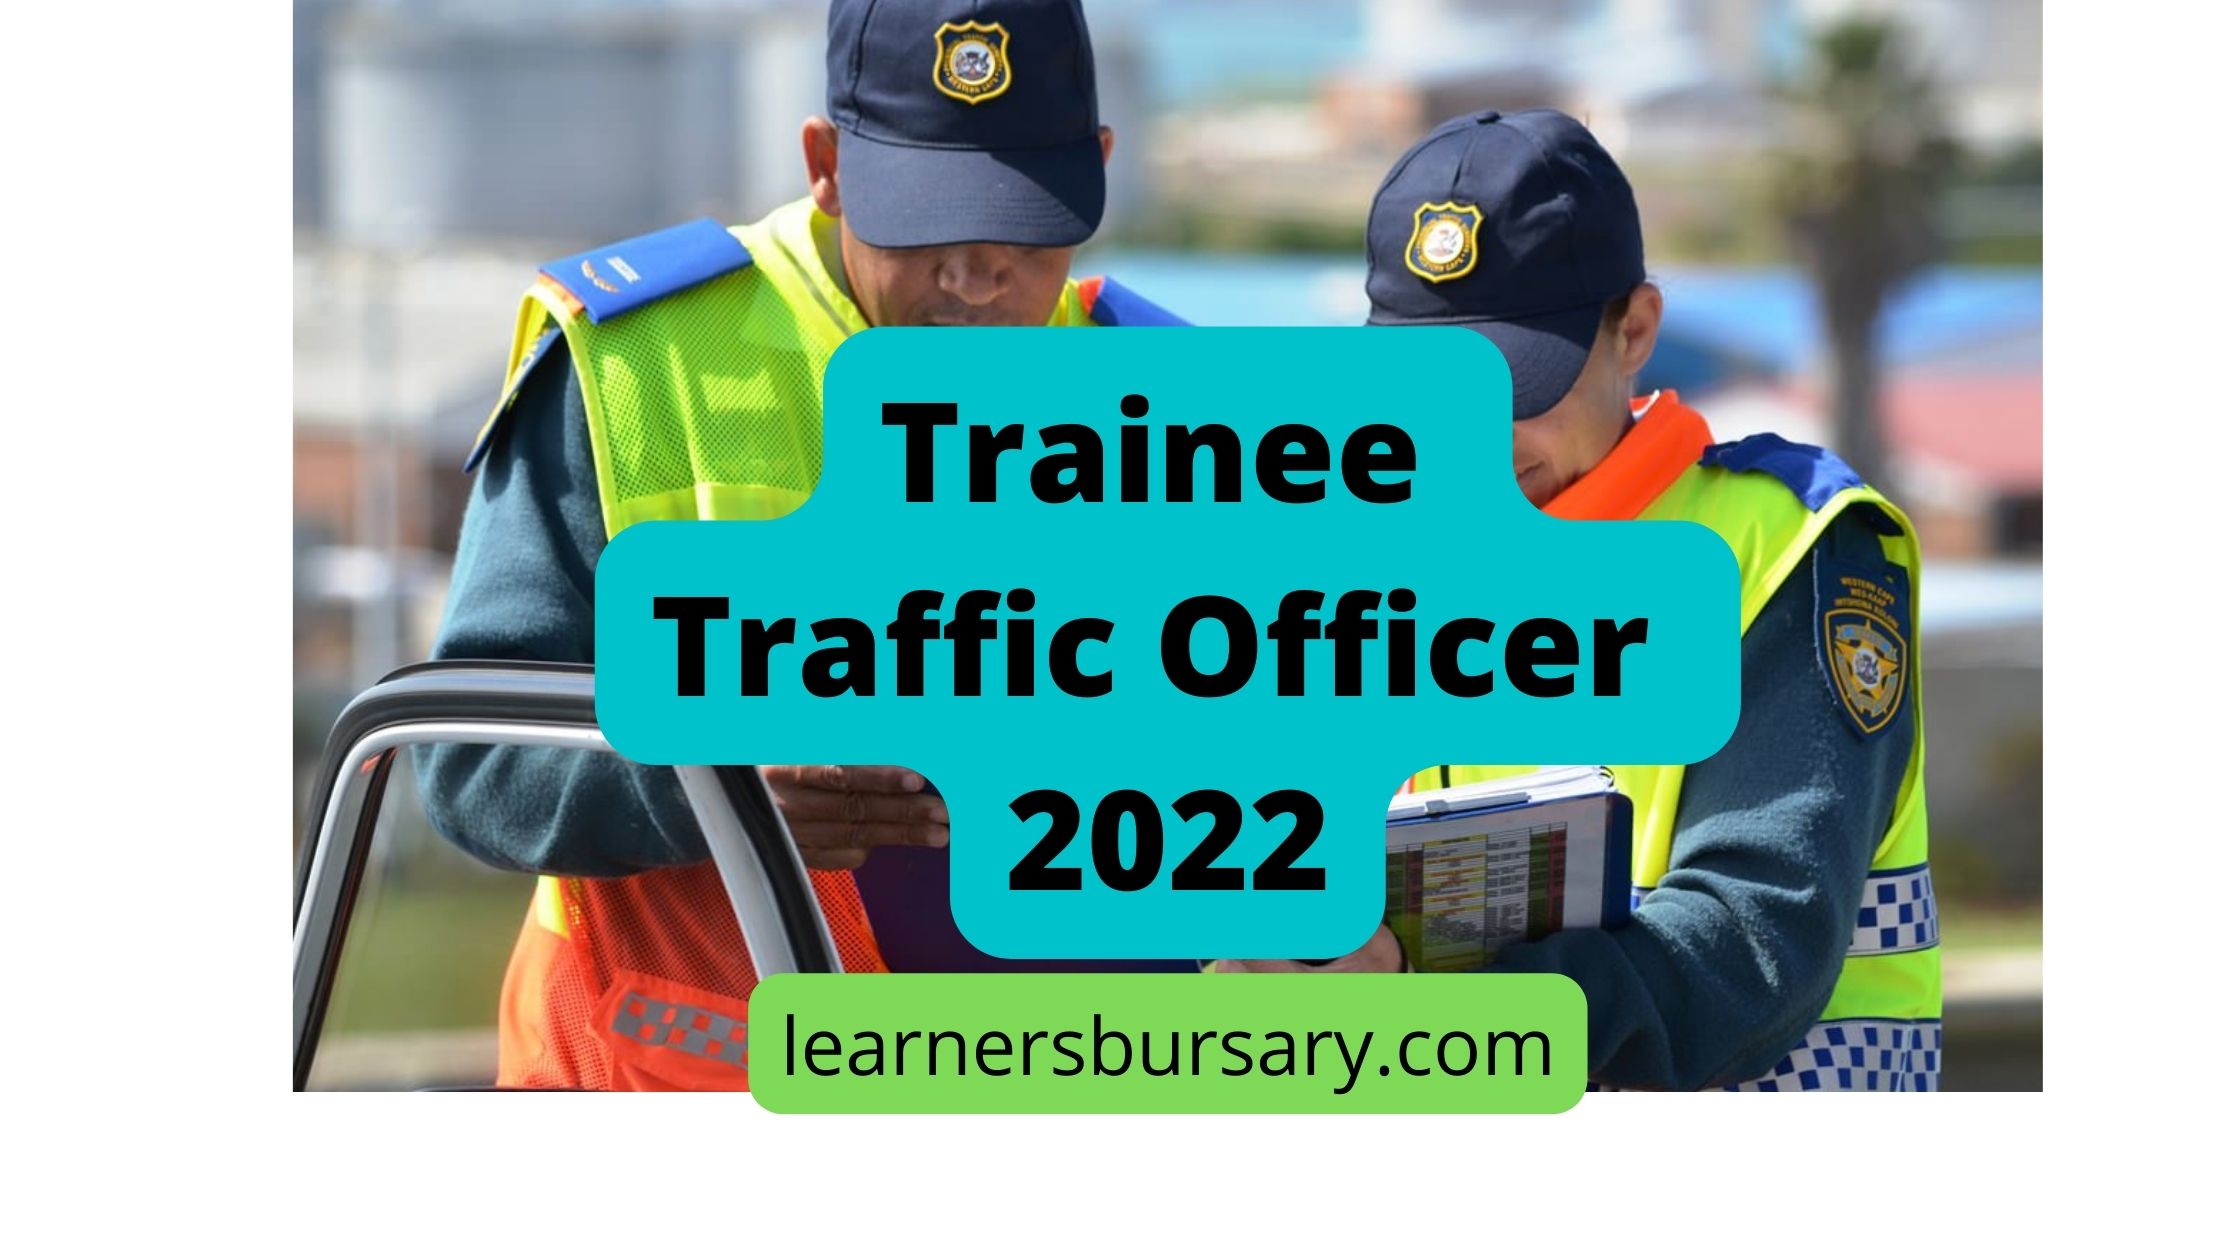 Trainee Traffic Officer 2022